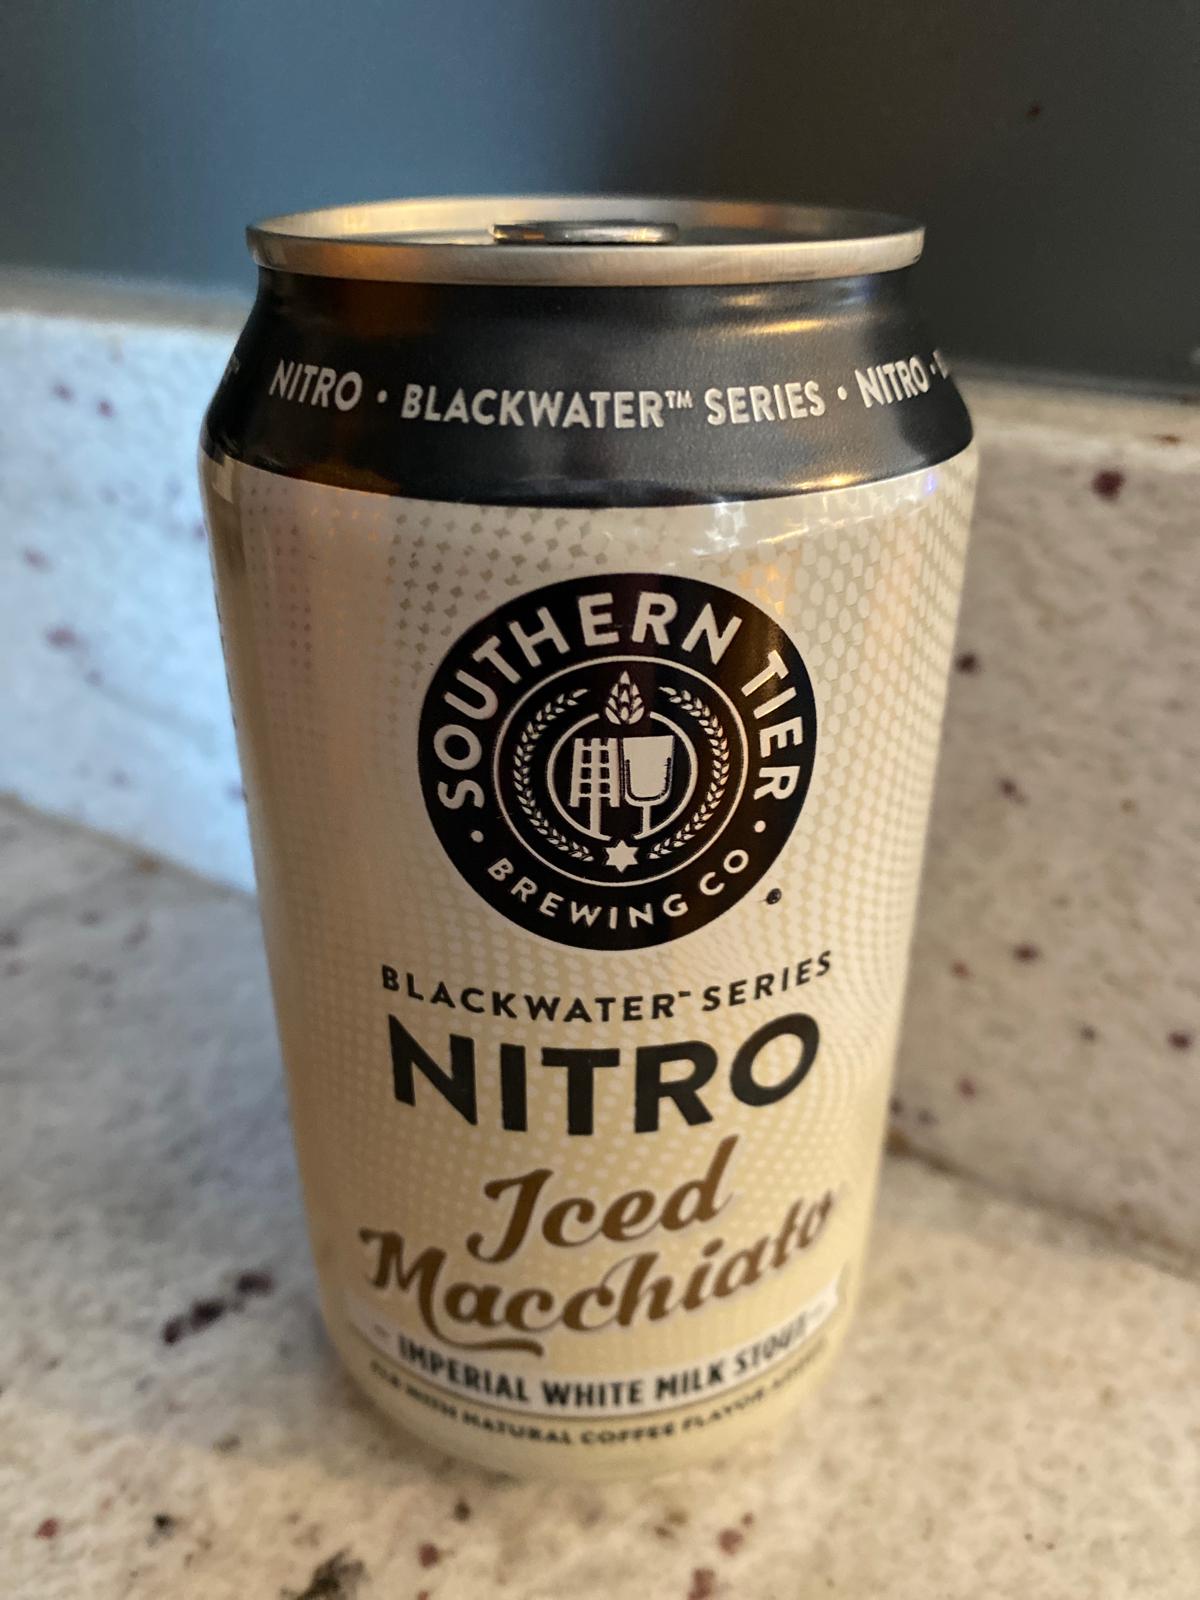 Blackwater Series: Iced Macchiato (Nitro)